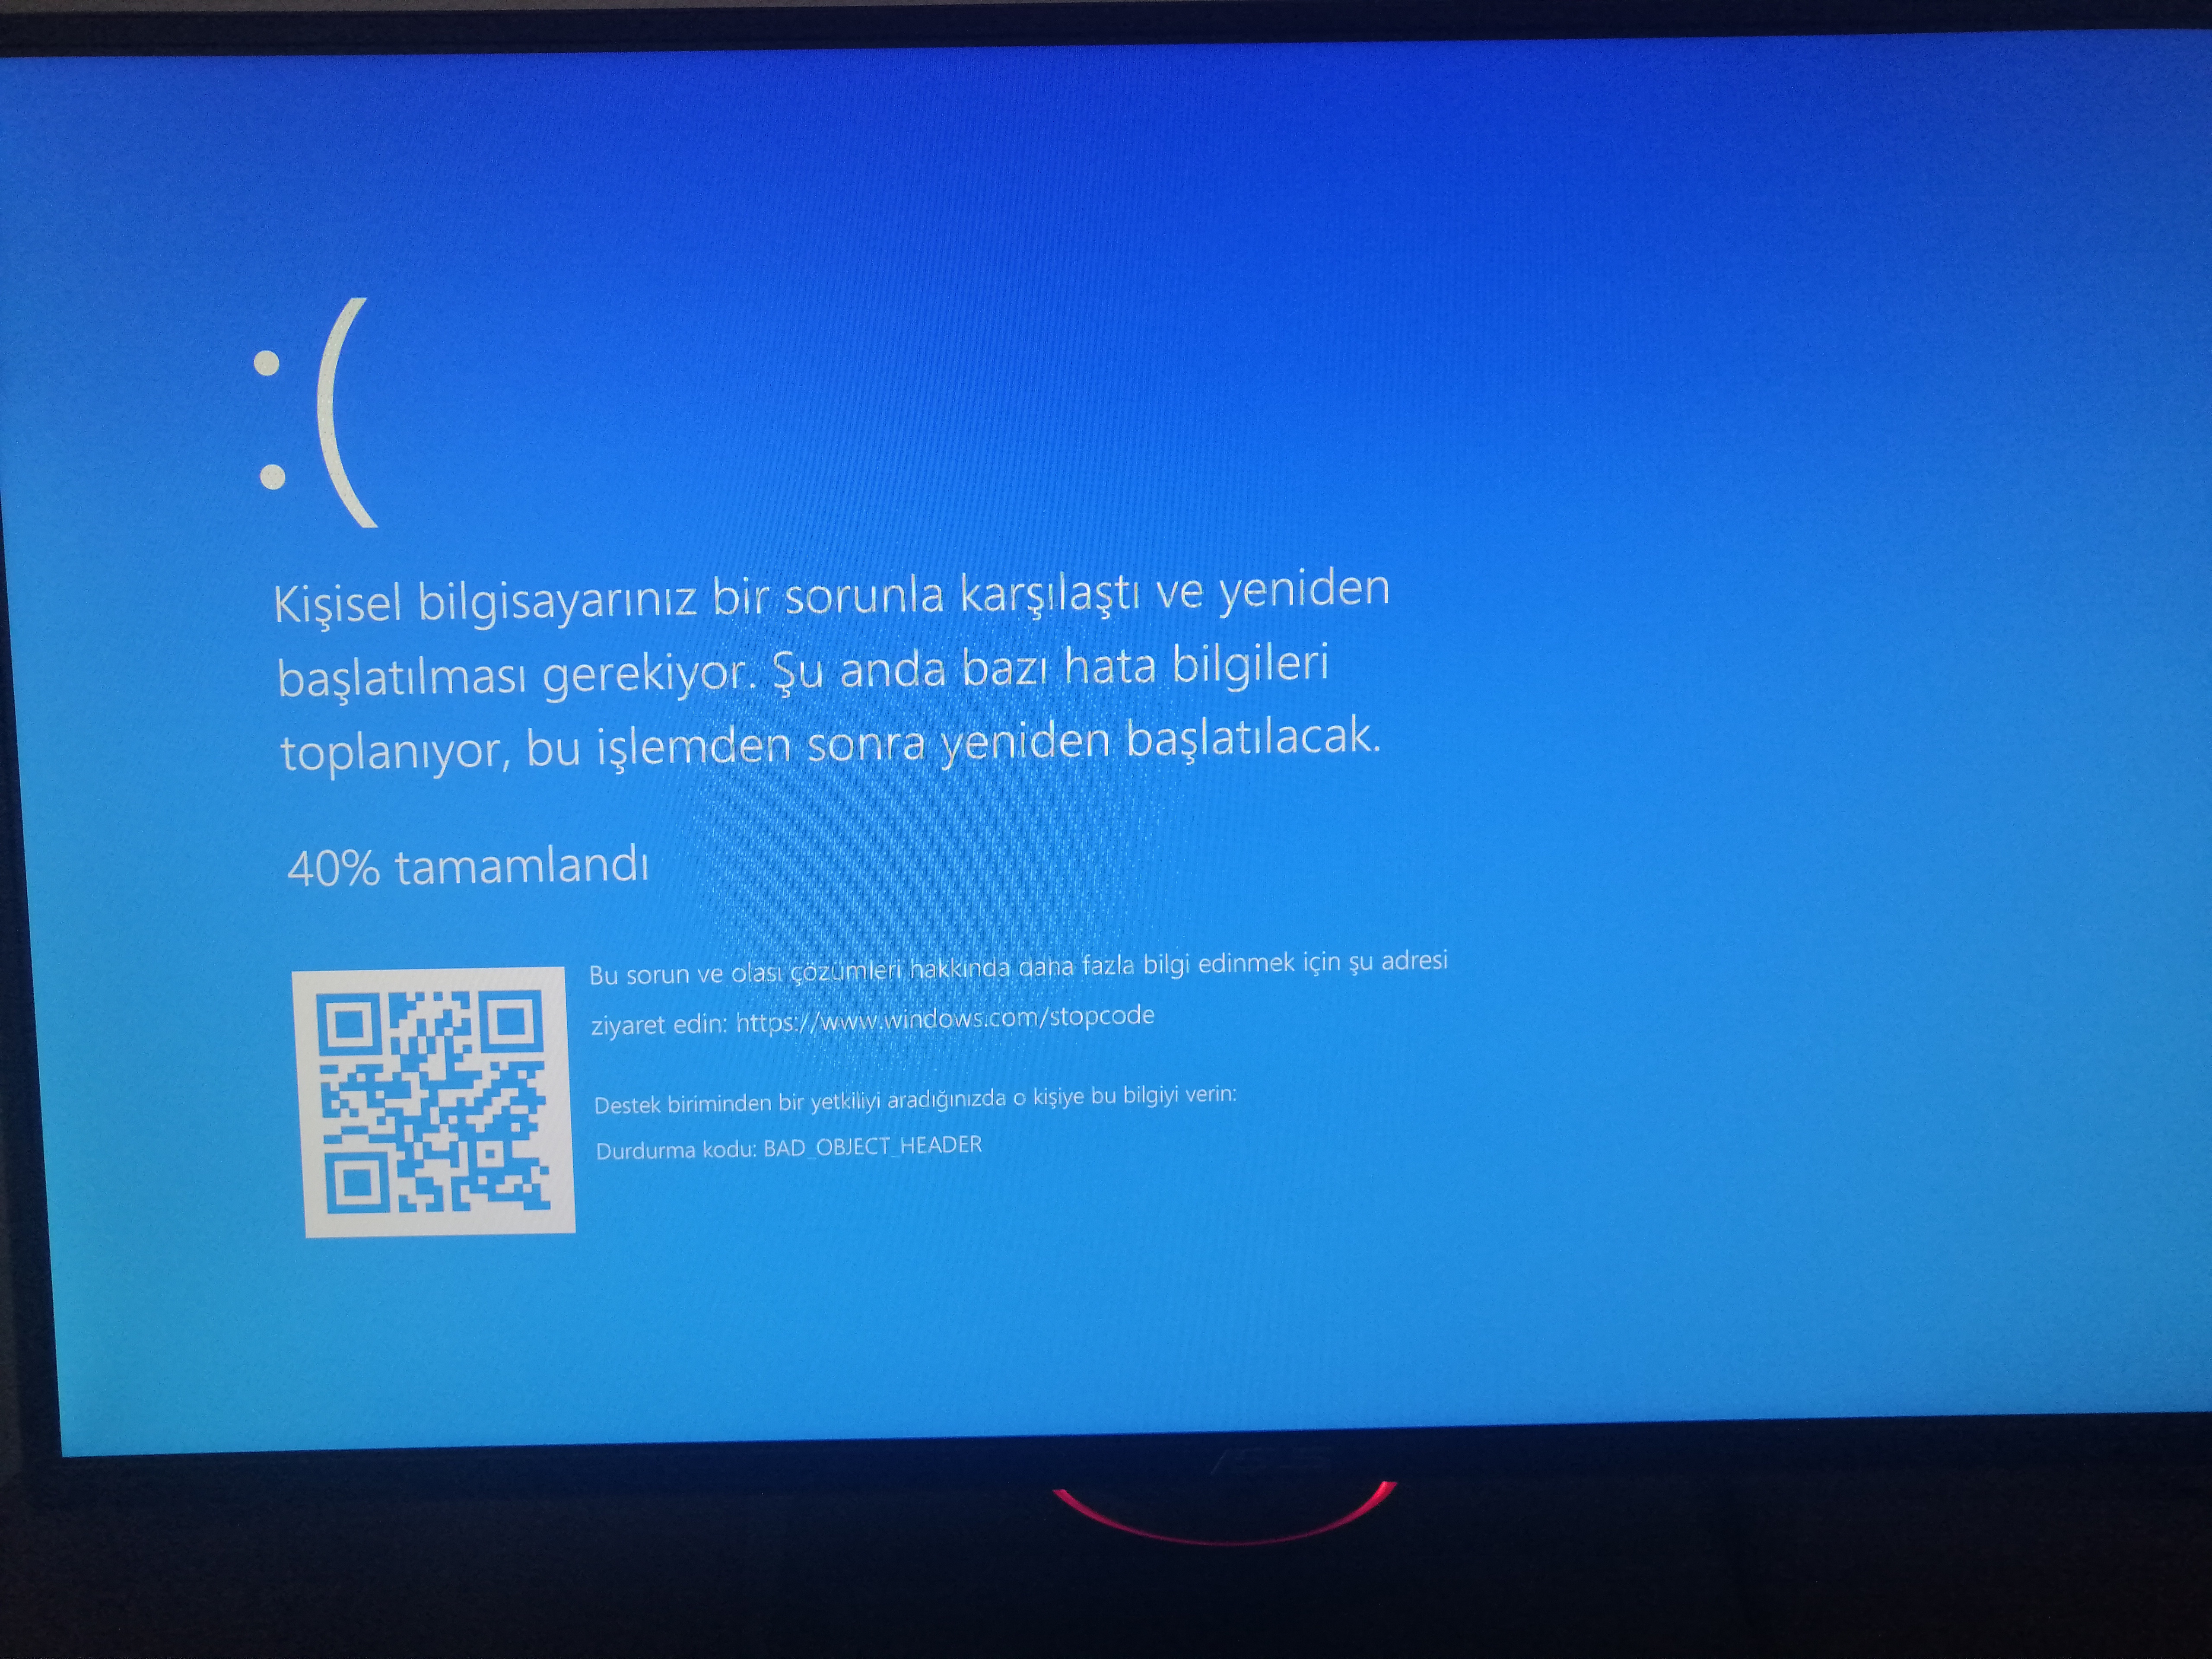 Перезагружается игра. The Screen will Freeze for a few seconds while Updating the BIOS.